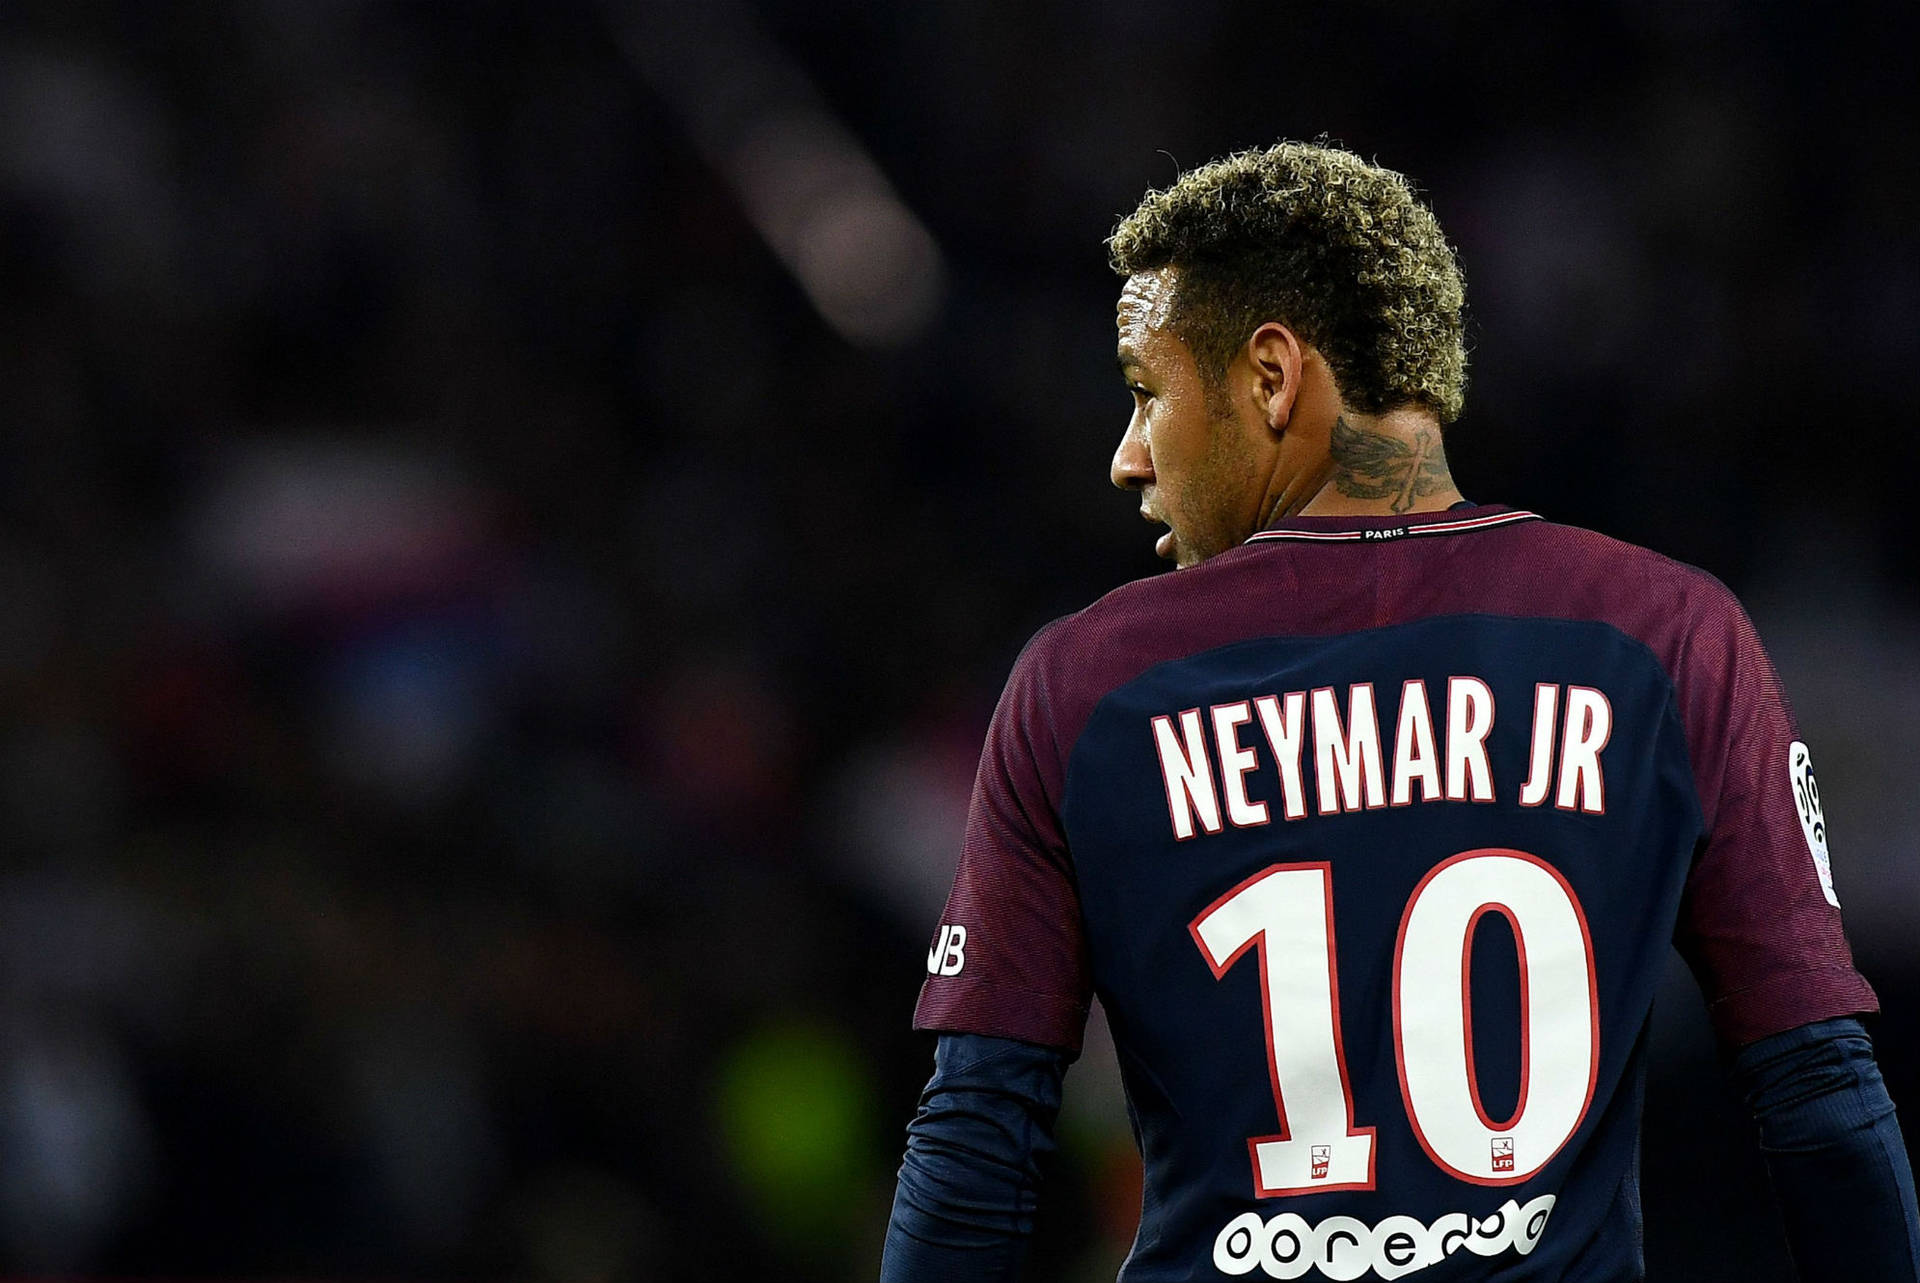 Neymar Jr Number 10 Jersey